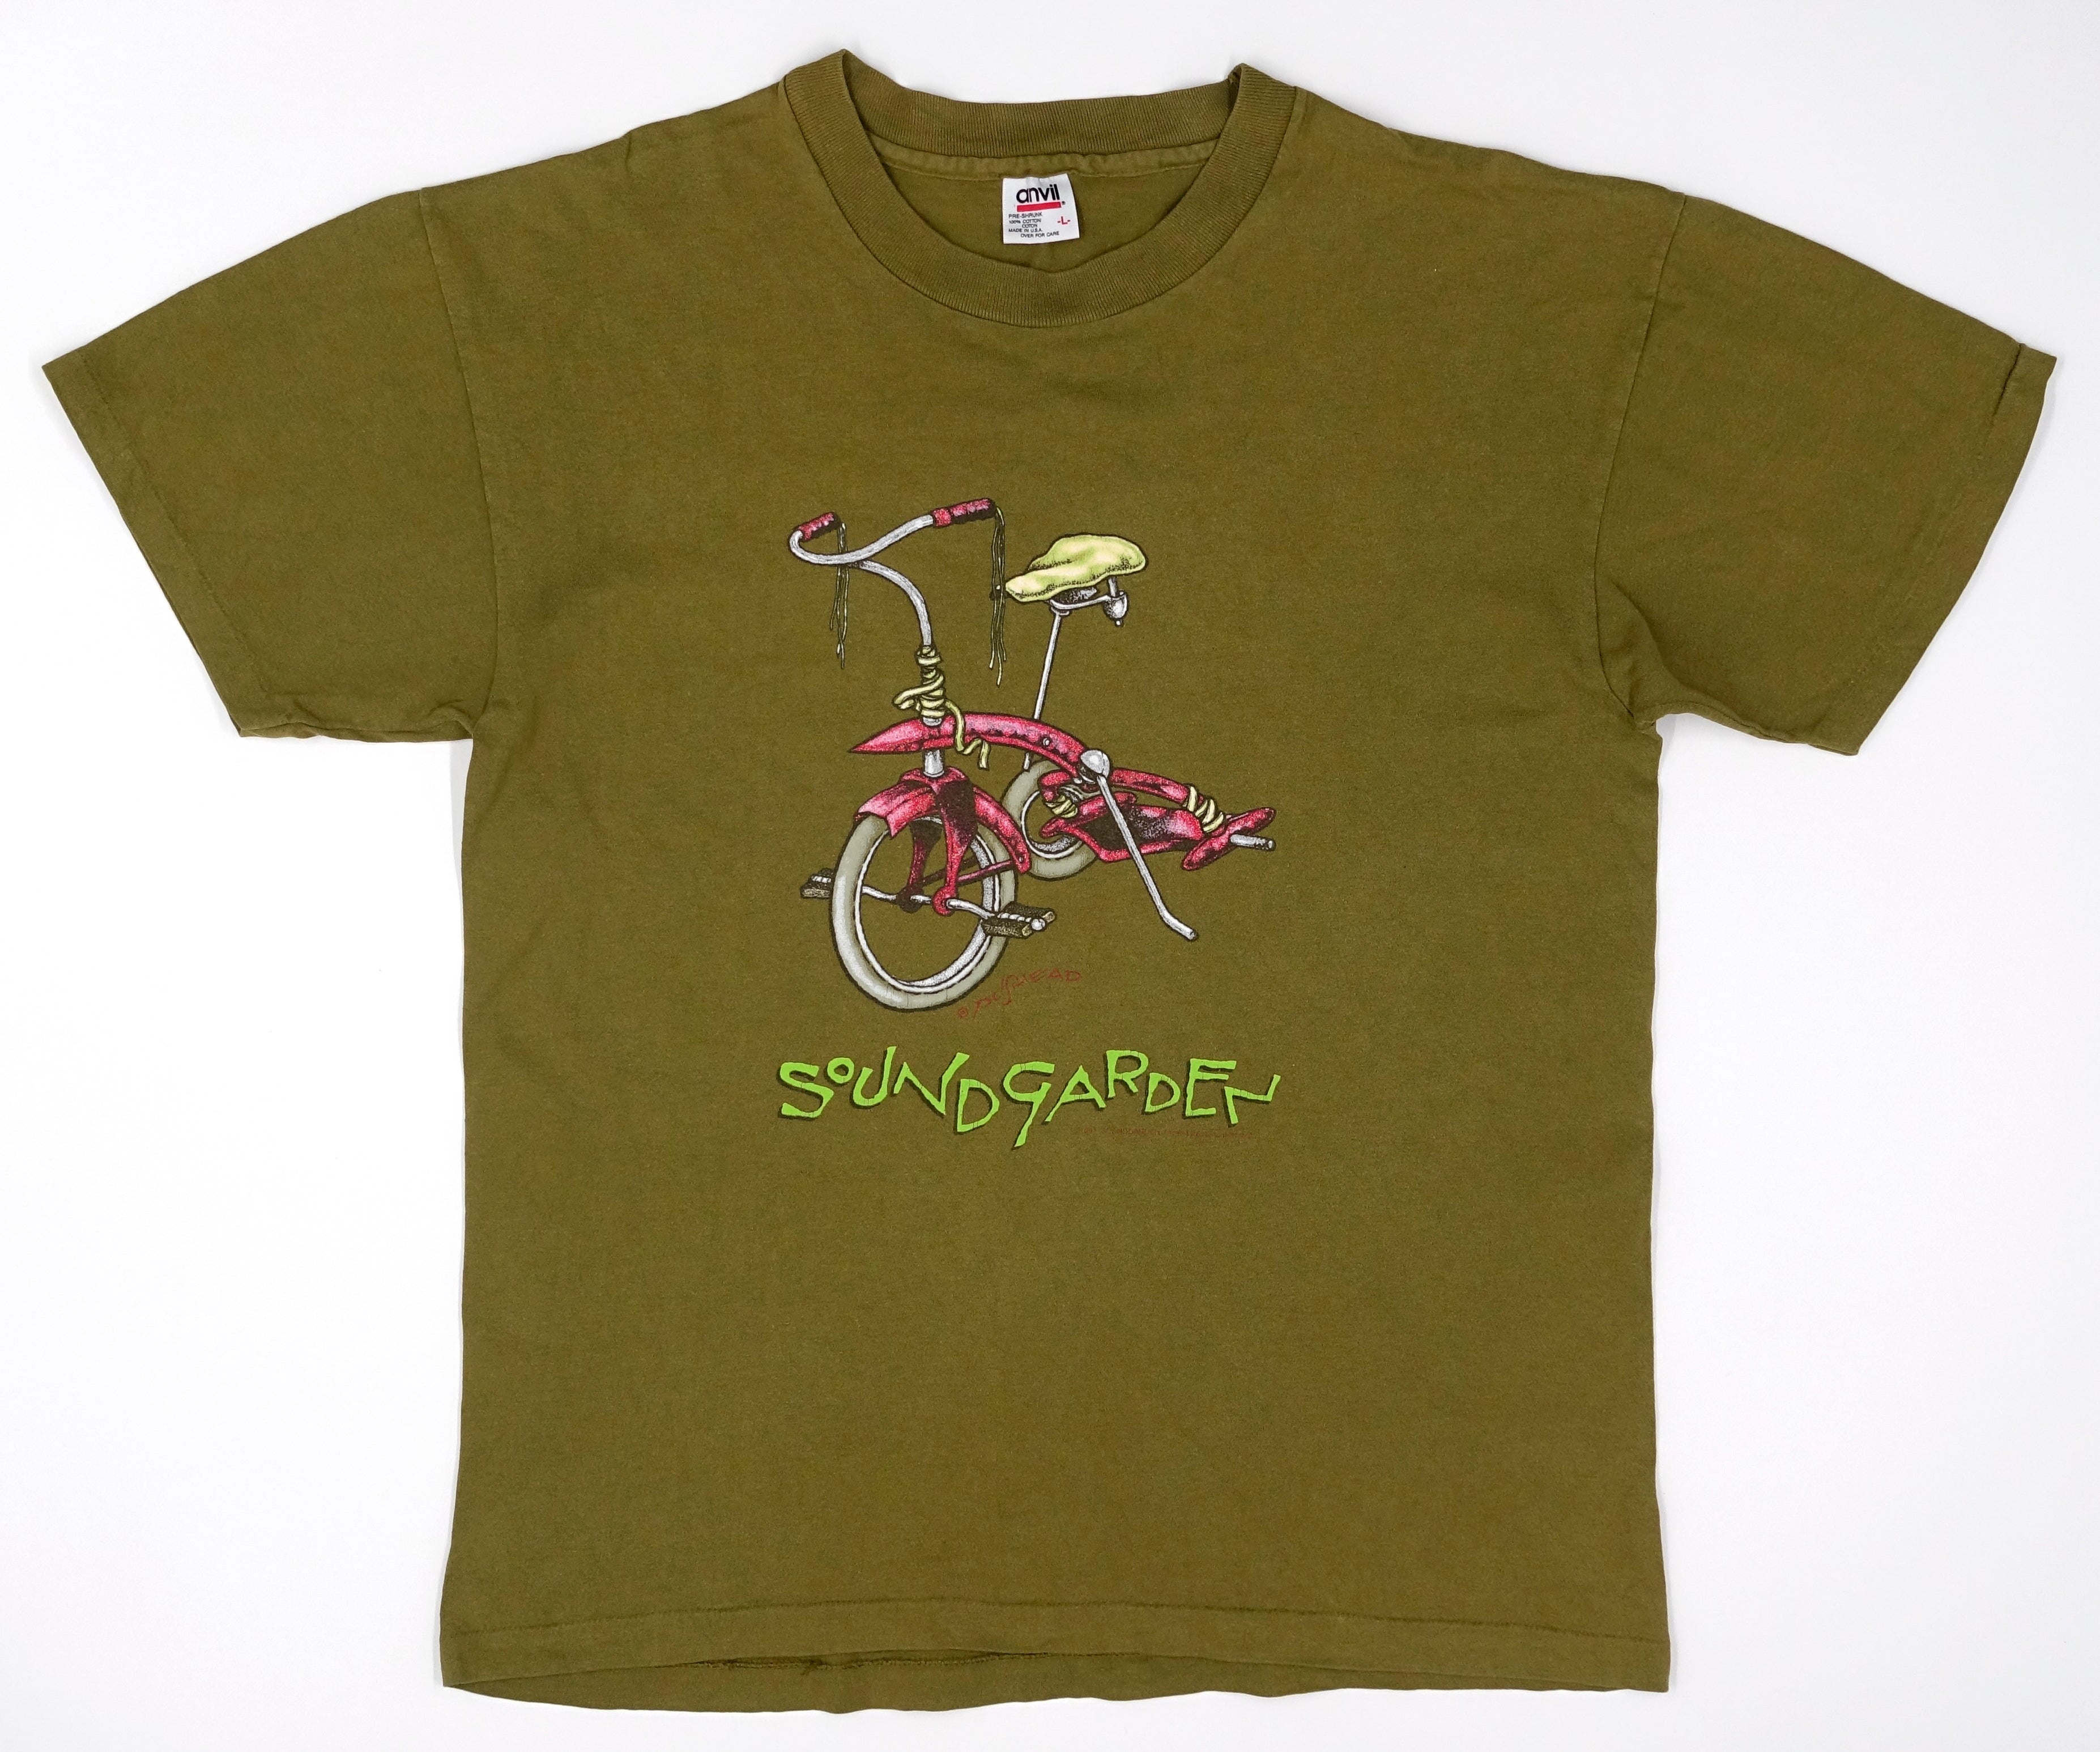 Soundgarden – Pushead Come Stand Me Up 1994 Tour Shirt Size Large